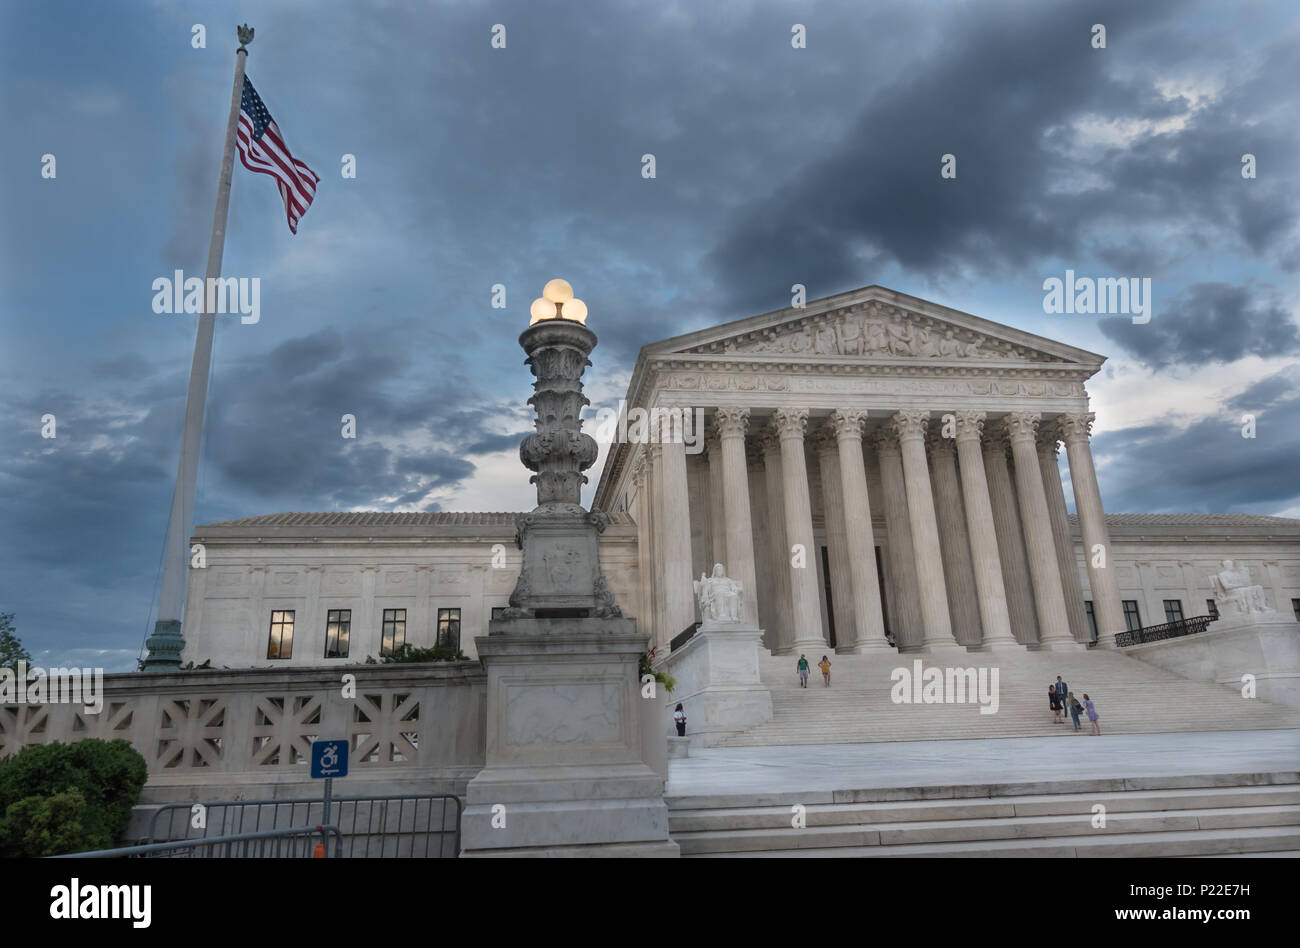 Evening ,US Supreme Court building, Washington, DC, flag flying Stock Photo